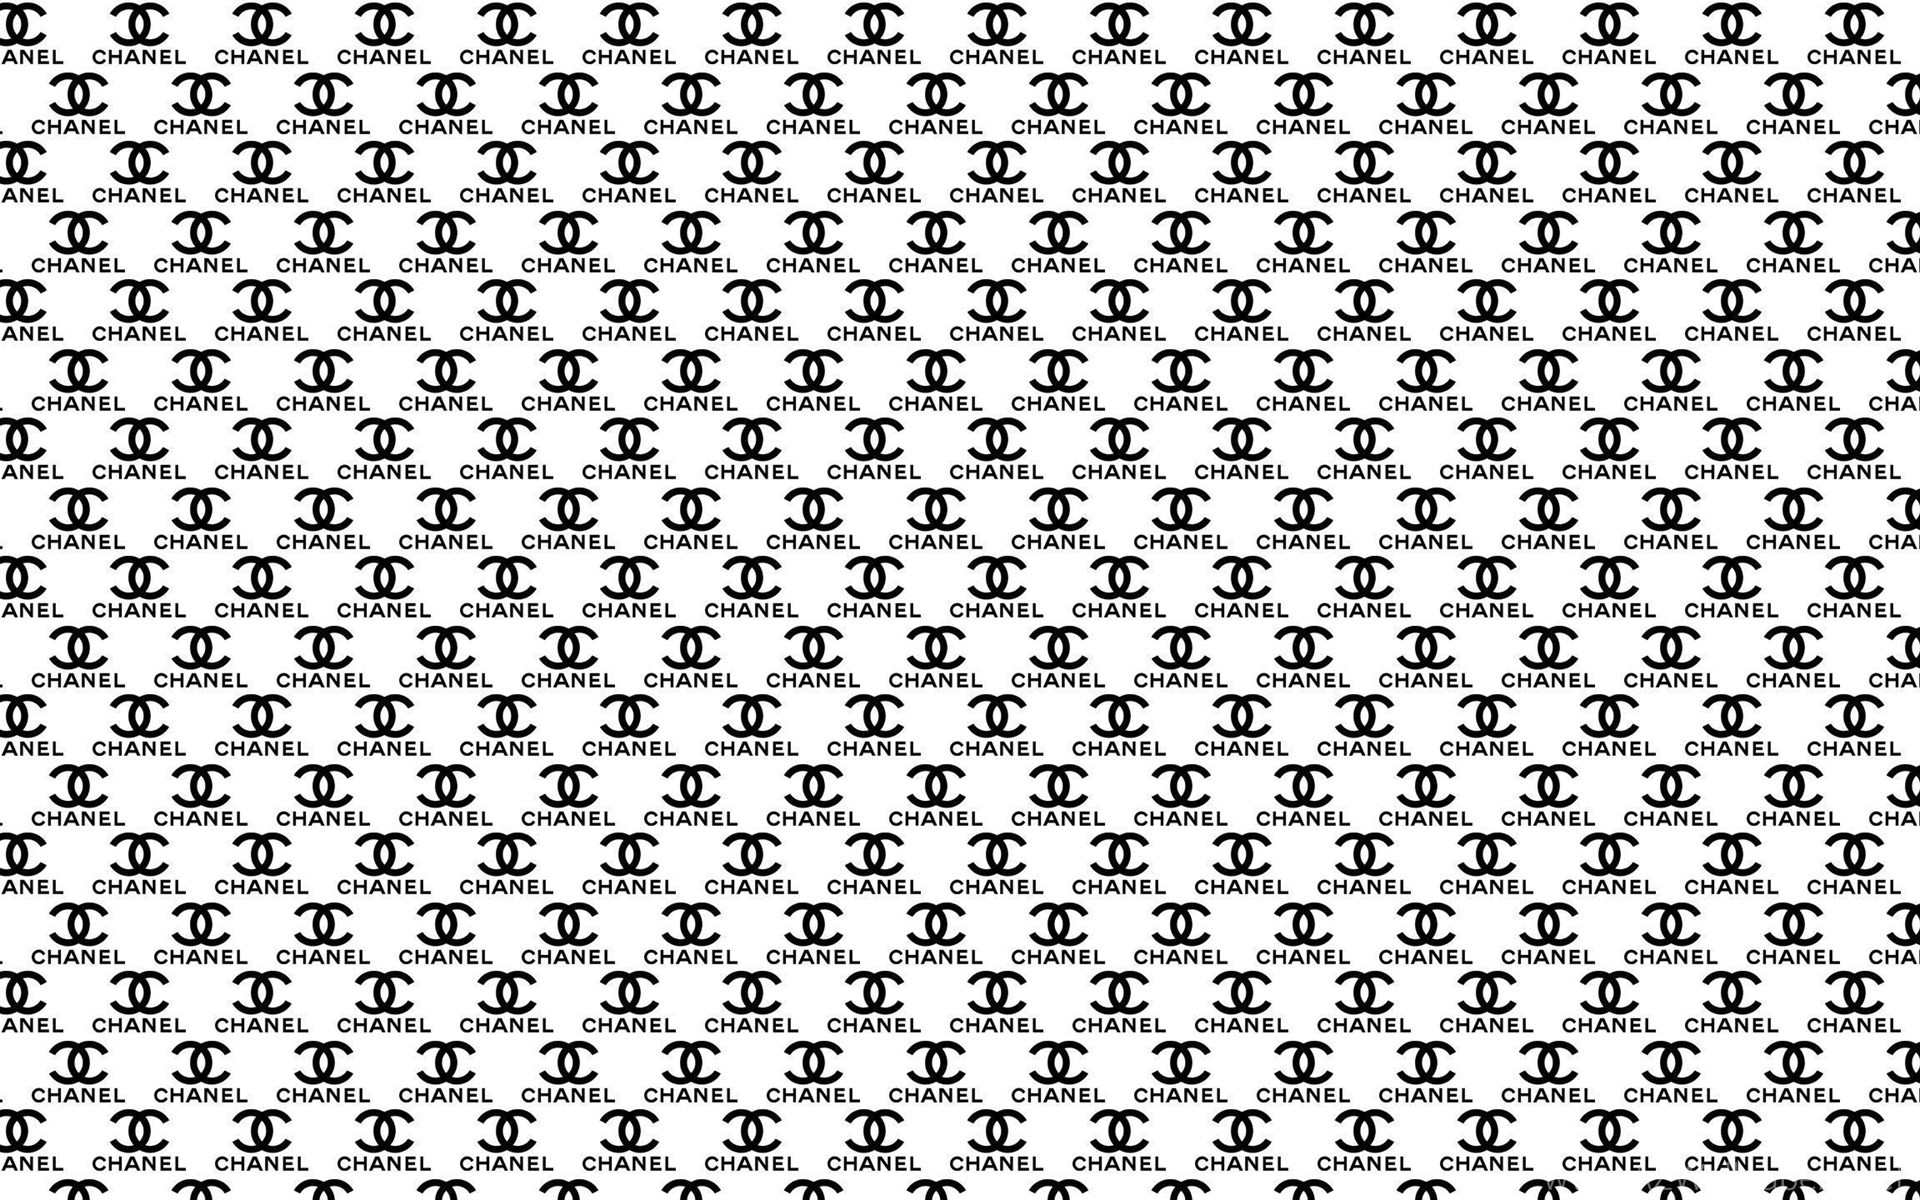 Chanel Wallpapers Backgrounds free download | PixelsTalk.Net